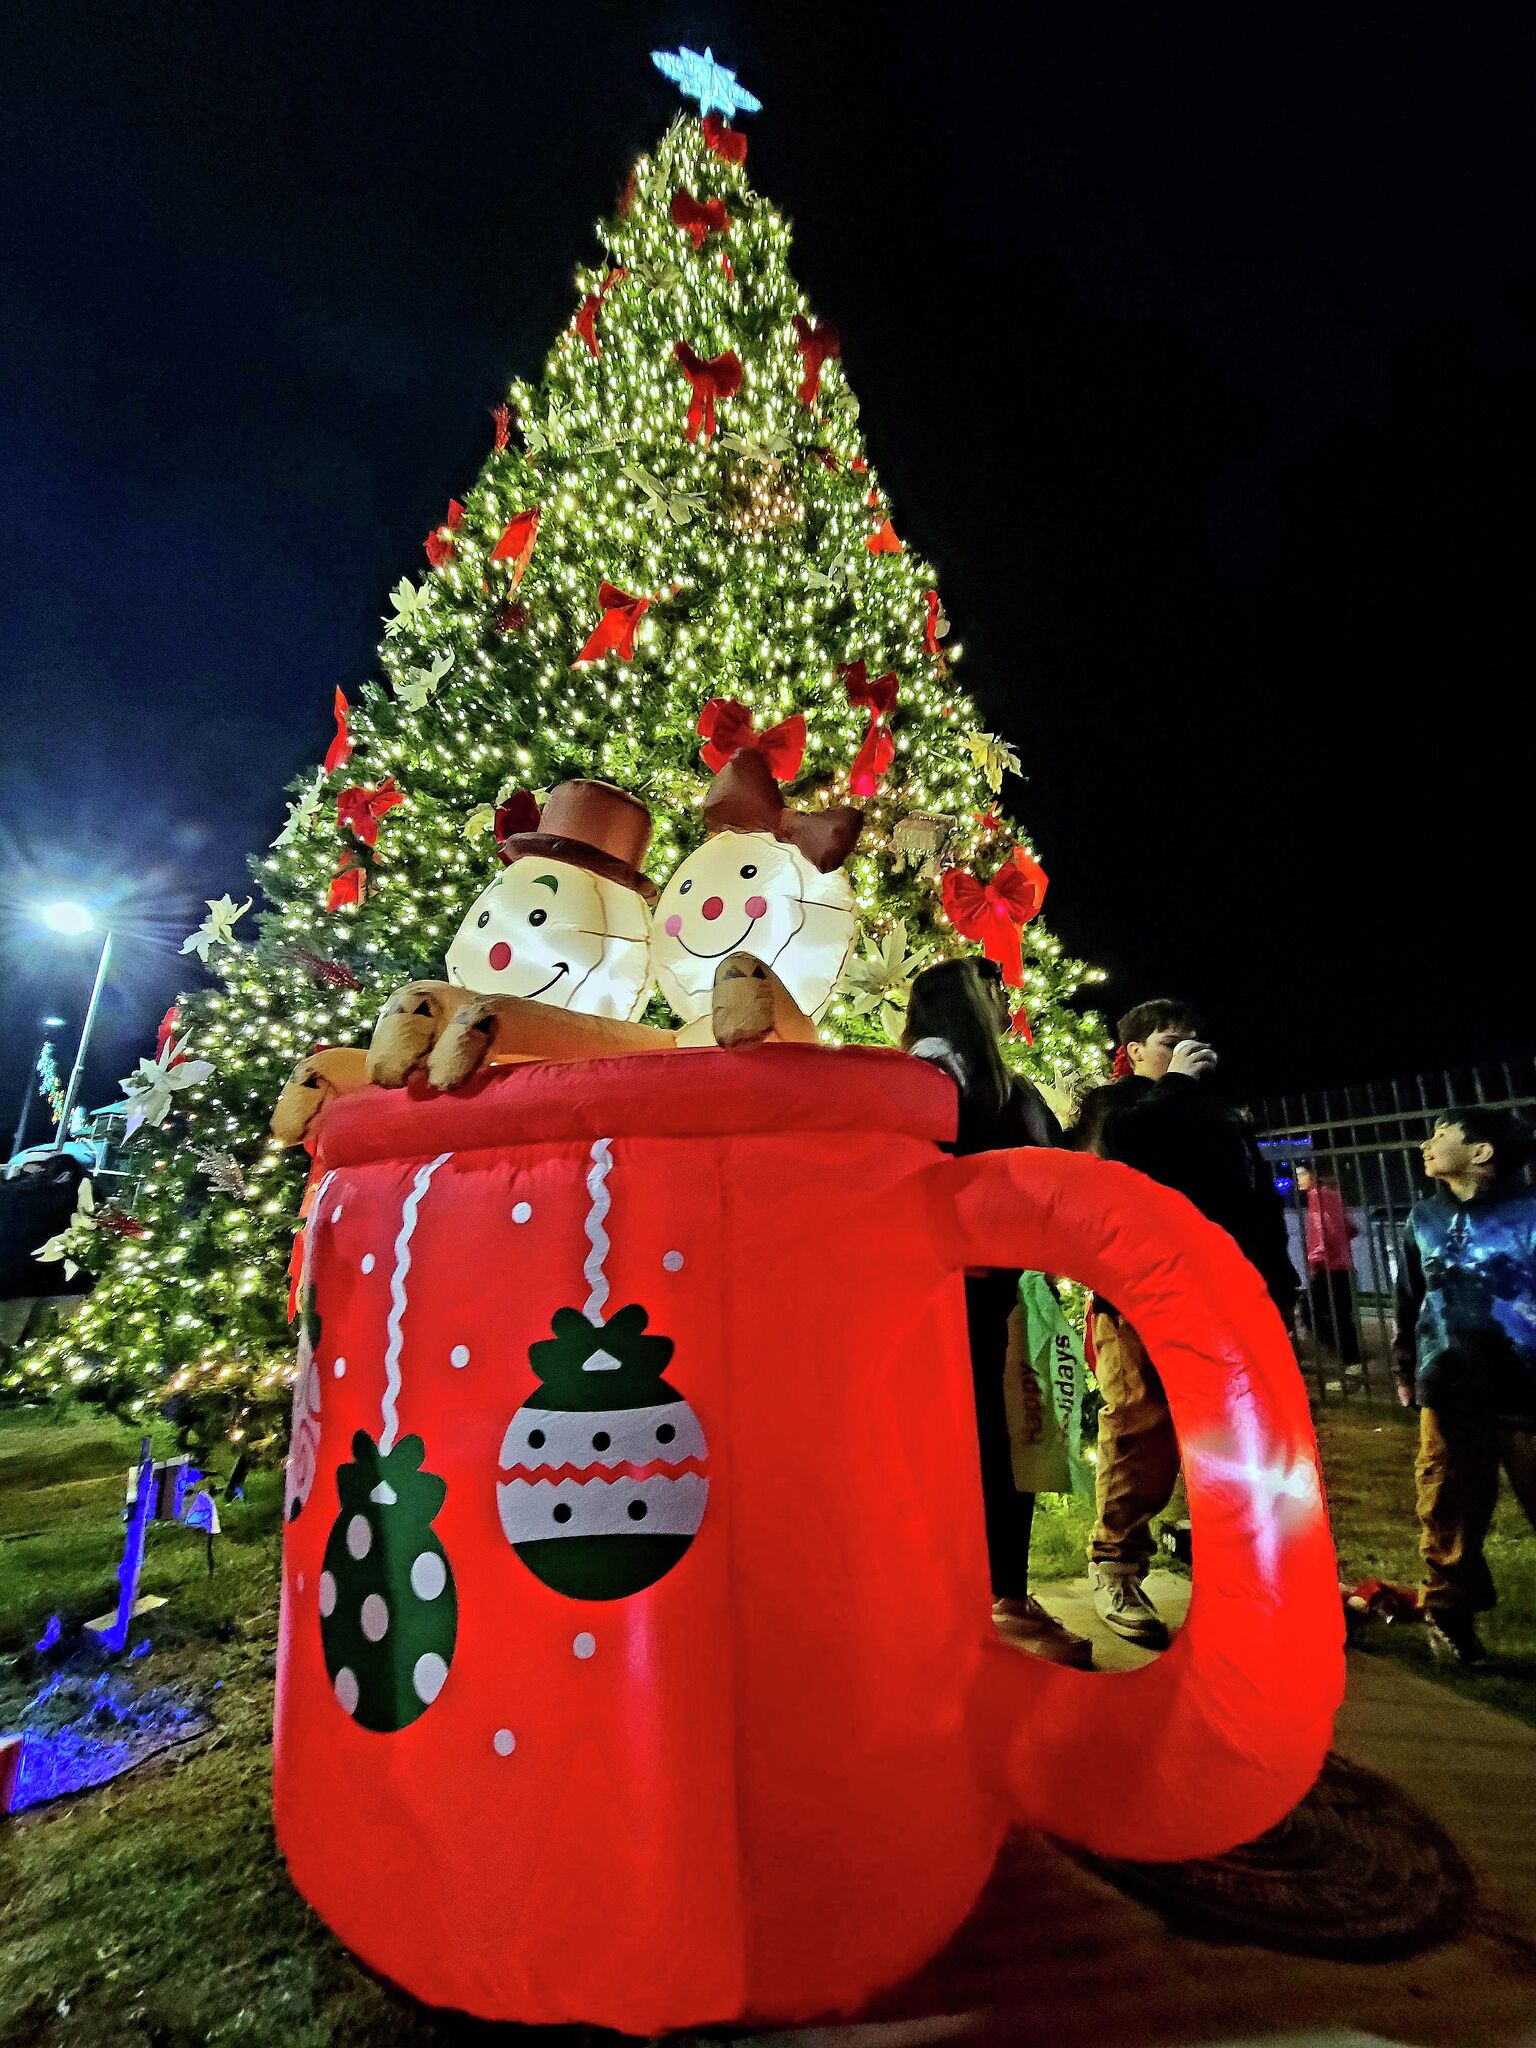 Laredo celebrates Christmas at North Central Park tree lighting event